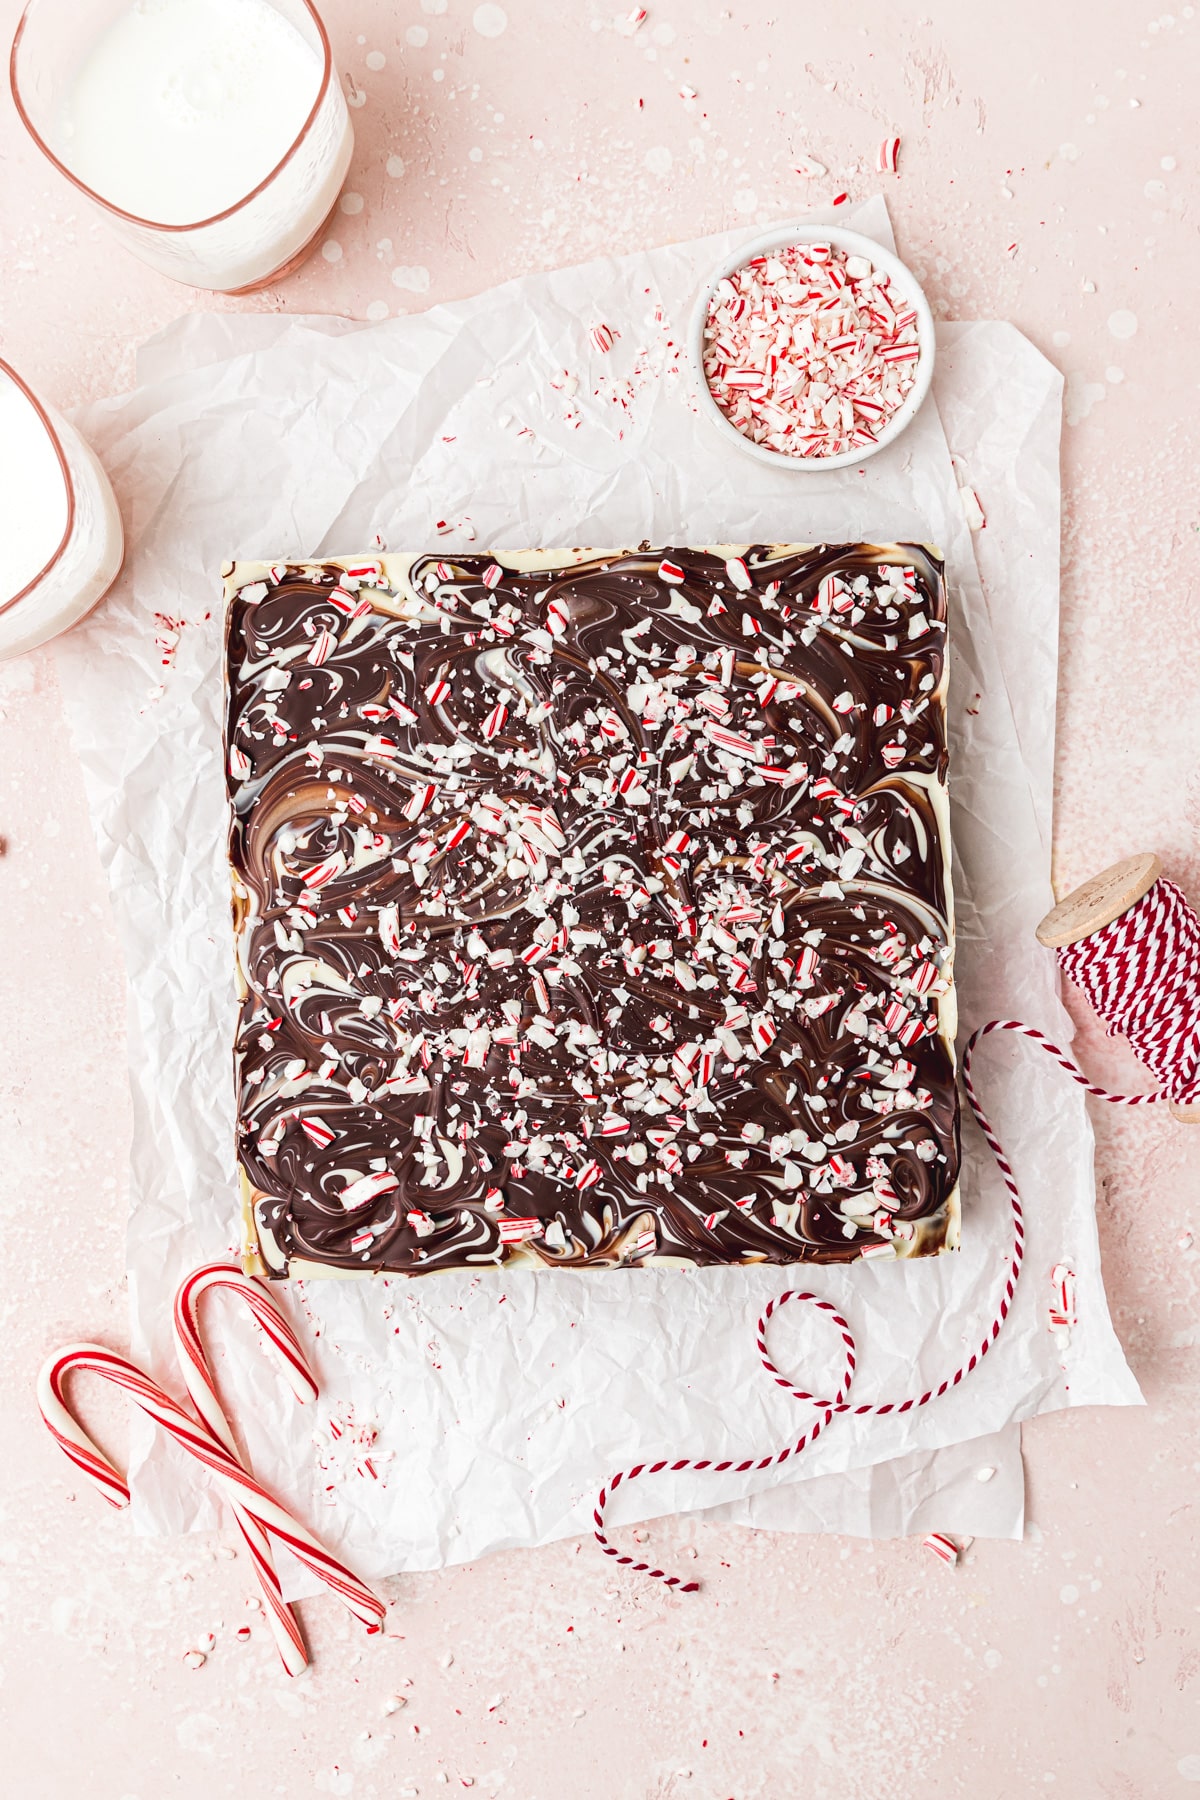 peppermint bark brownies with swirled dark and white chocolate.